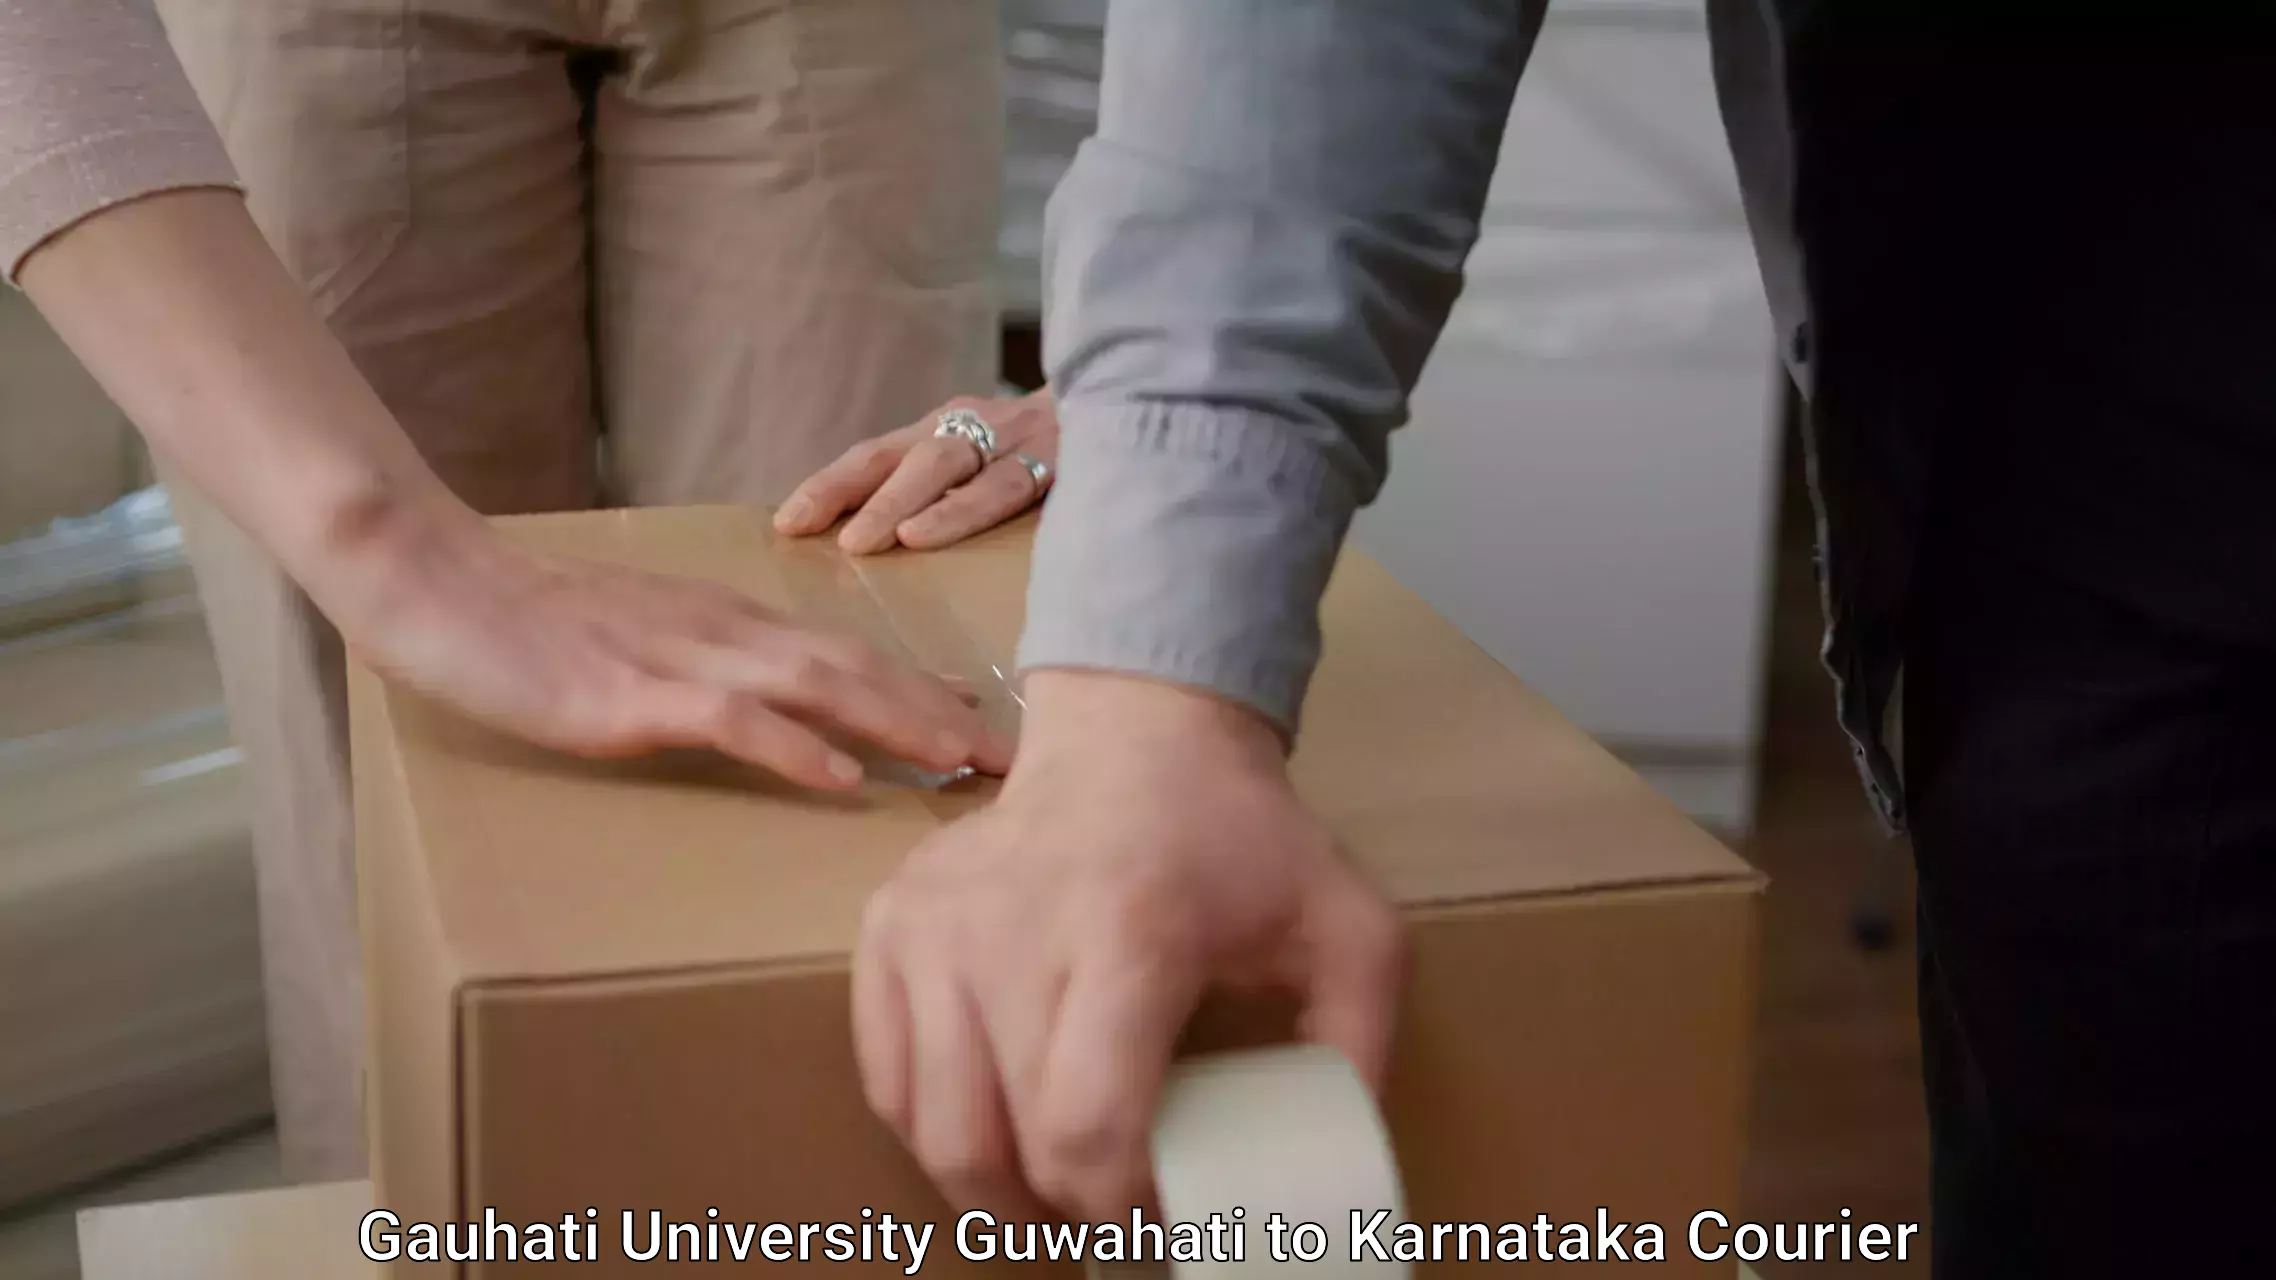 Professional furniture movers in Gauhati University Guwahati to Karnataka